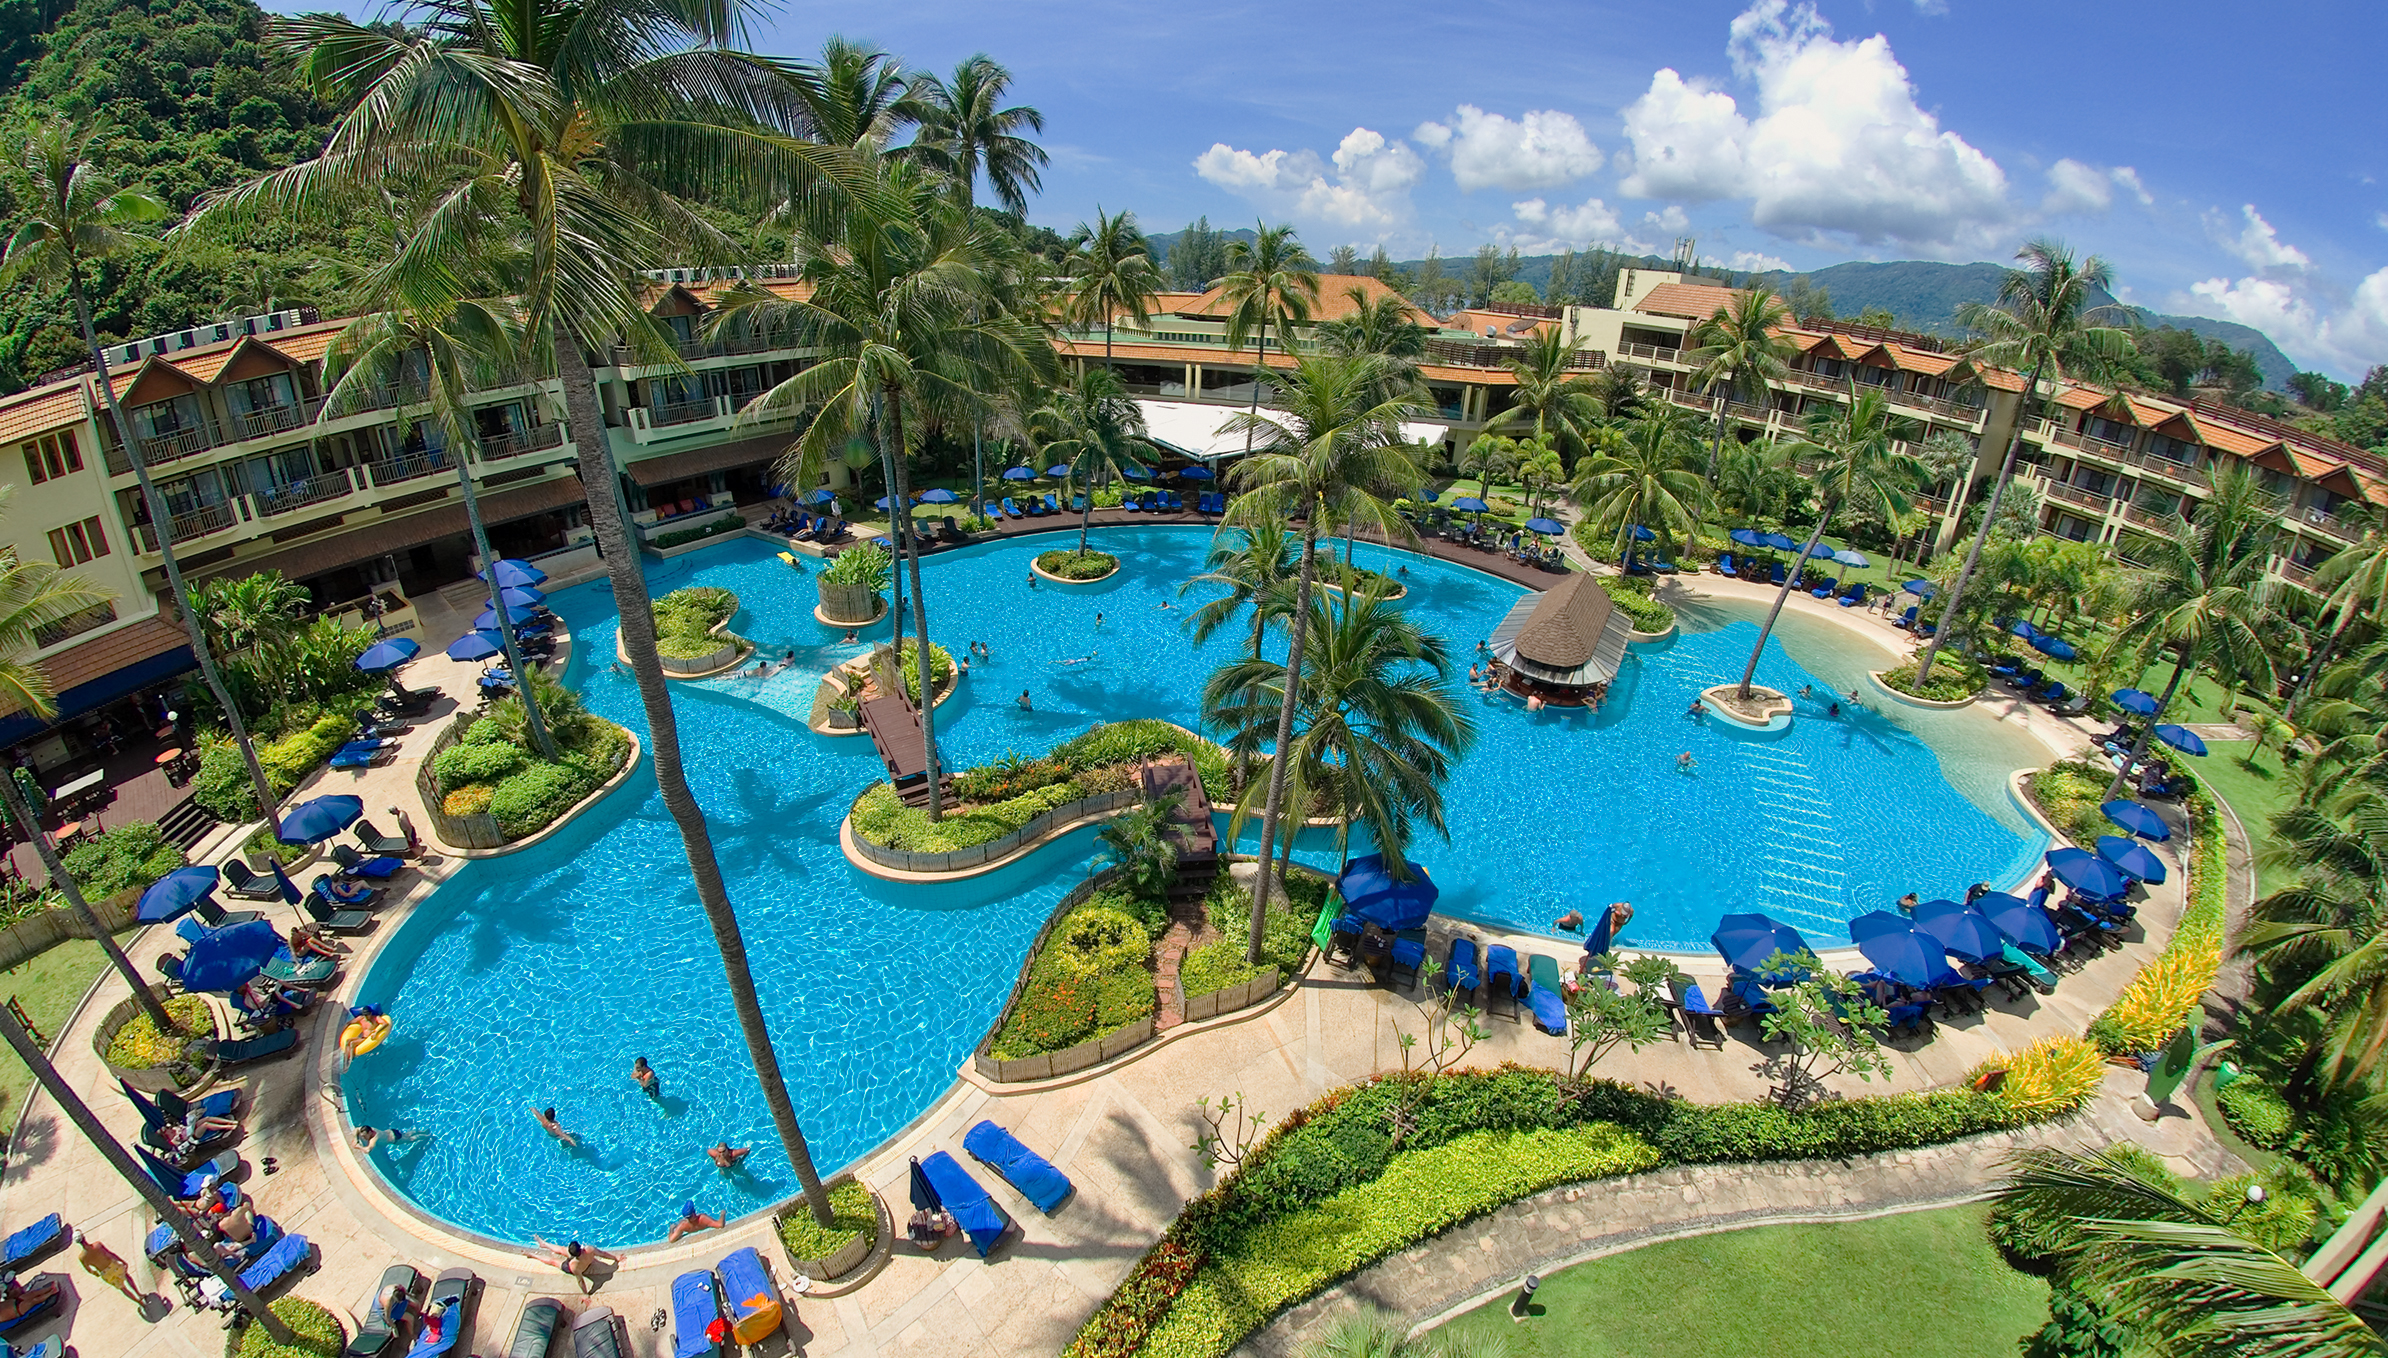 Pool Resort Phuket Palm Tree Thailand Holiday 2388x1358